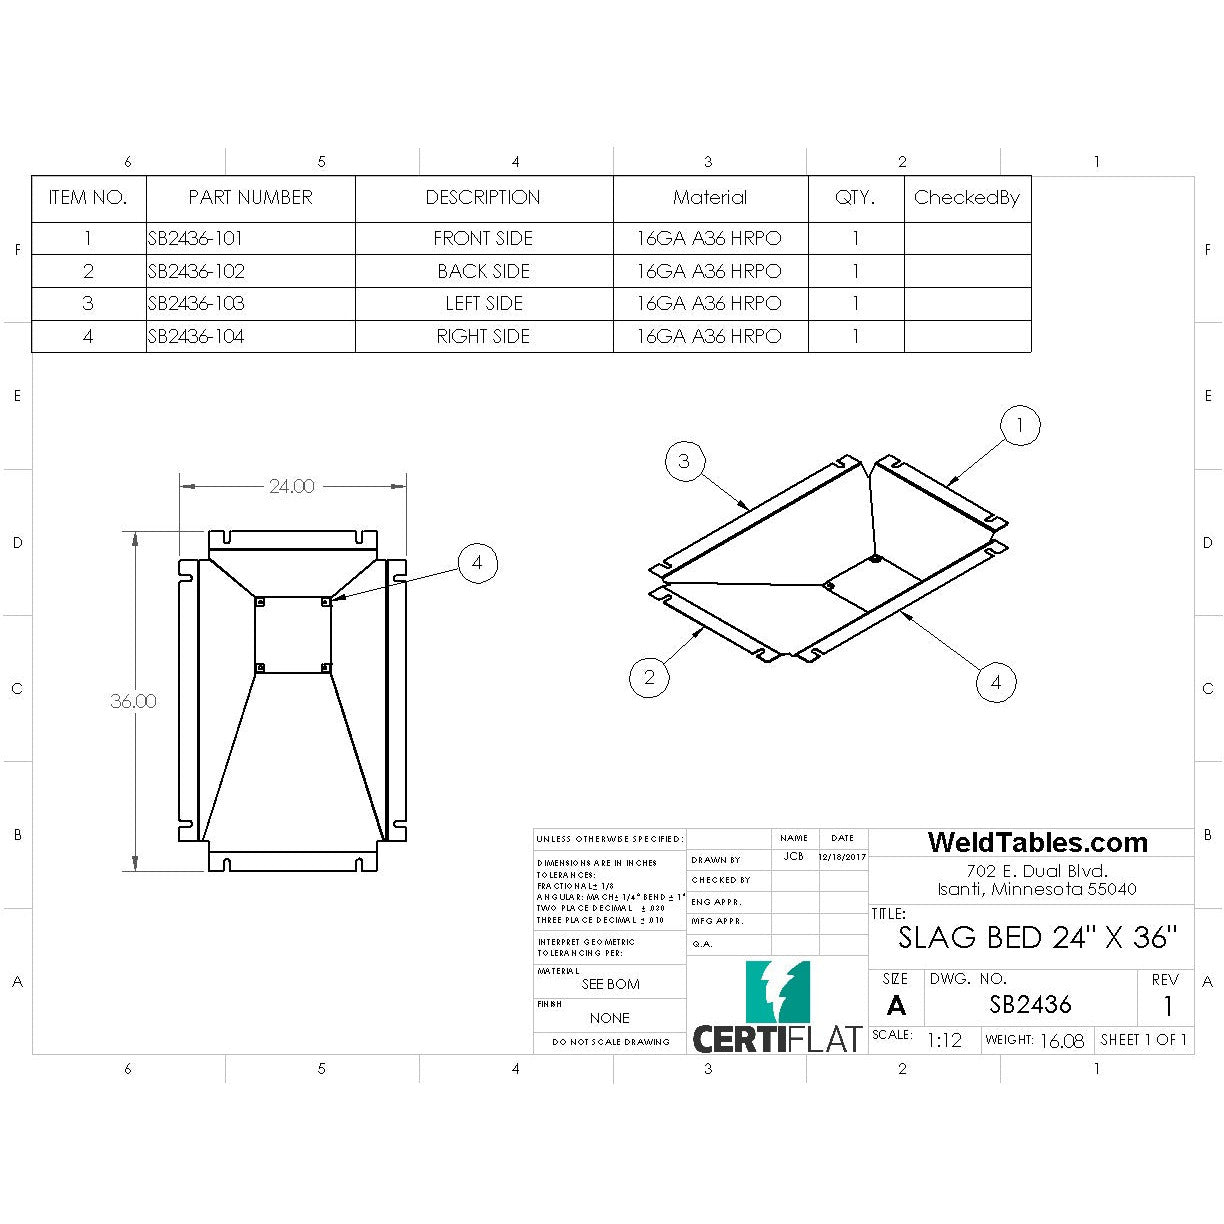 Slag Bed for CertiFlat 24"X36" Plasma Table